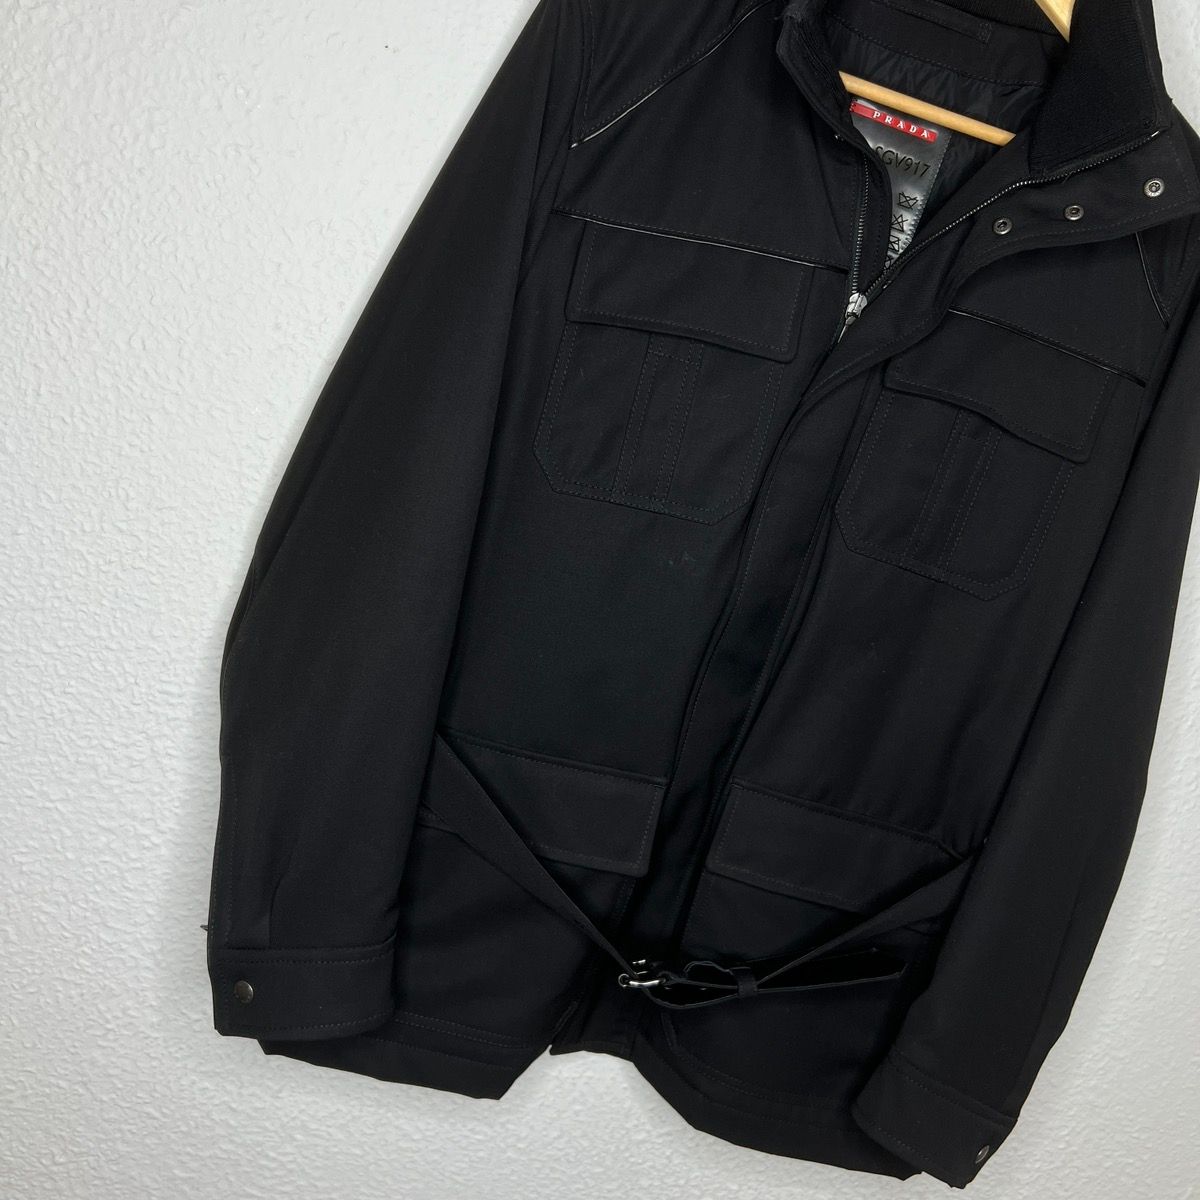 Prada Prada Milano Military Jacket Belted Coat Black Wool Designer Size US M / EU 48-50 / 2 - 2 Preview